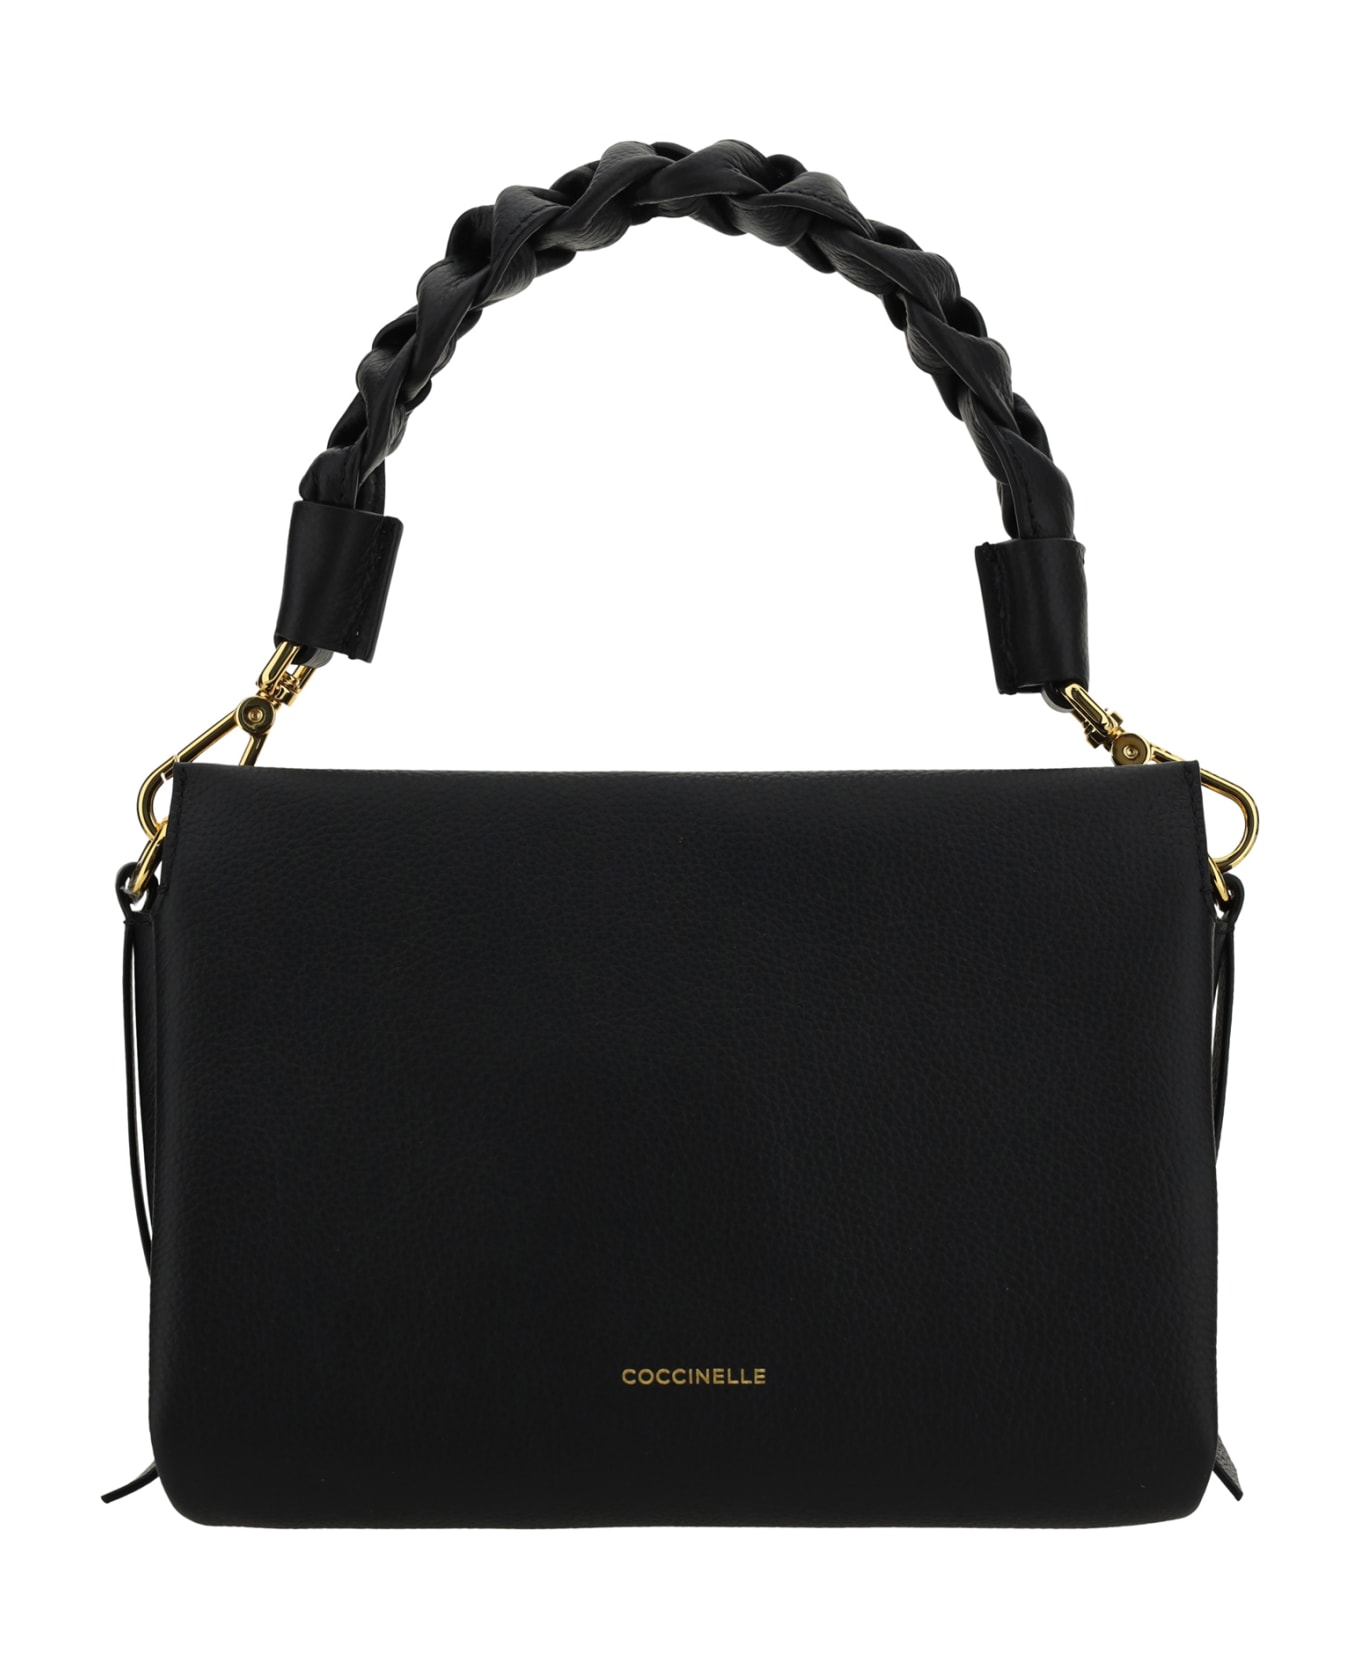 Coccinelle Boheme Handbag - Black